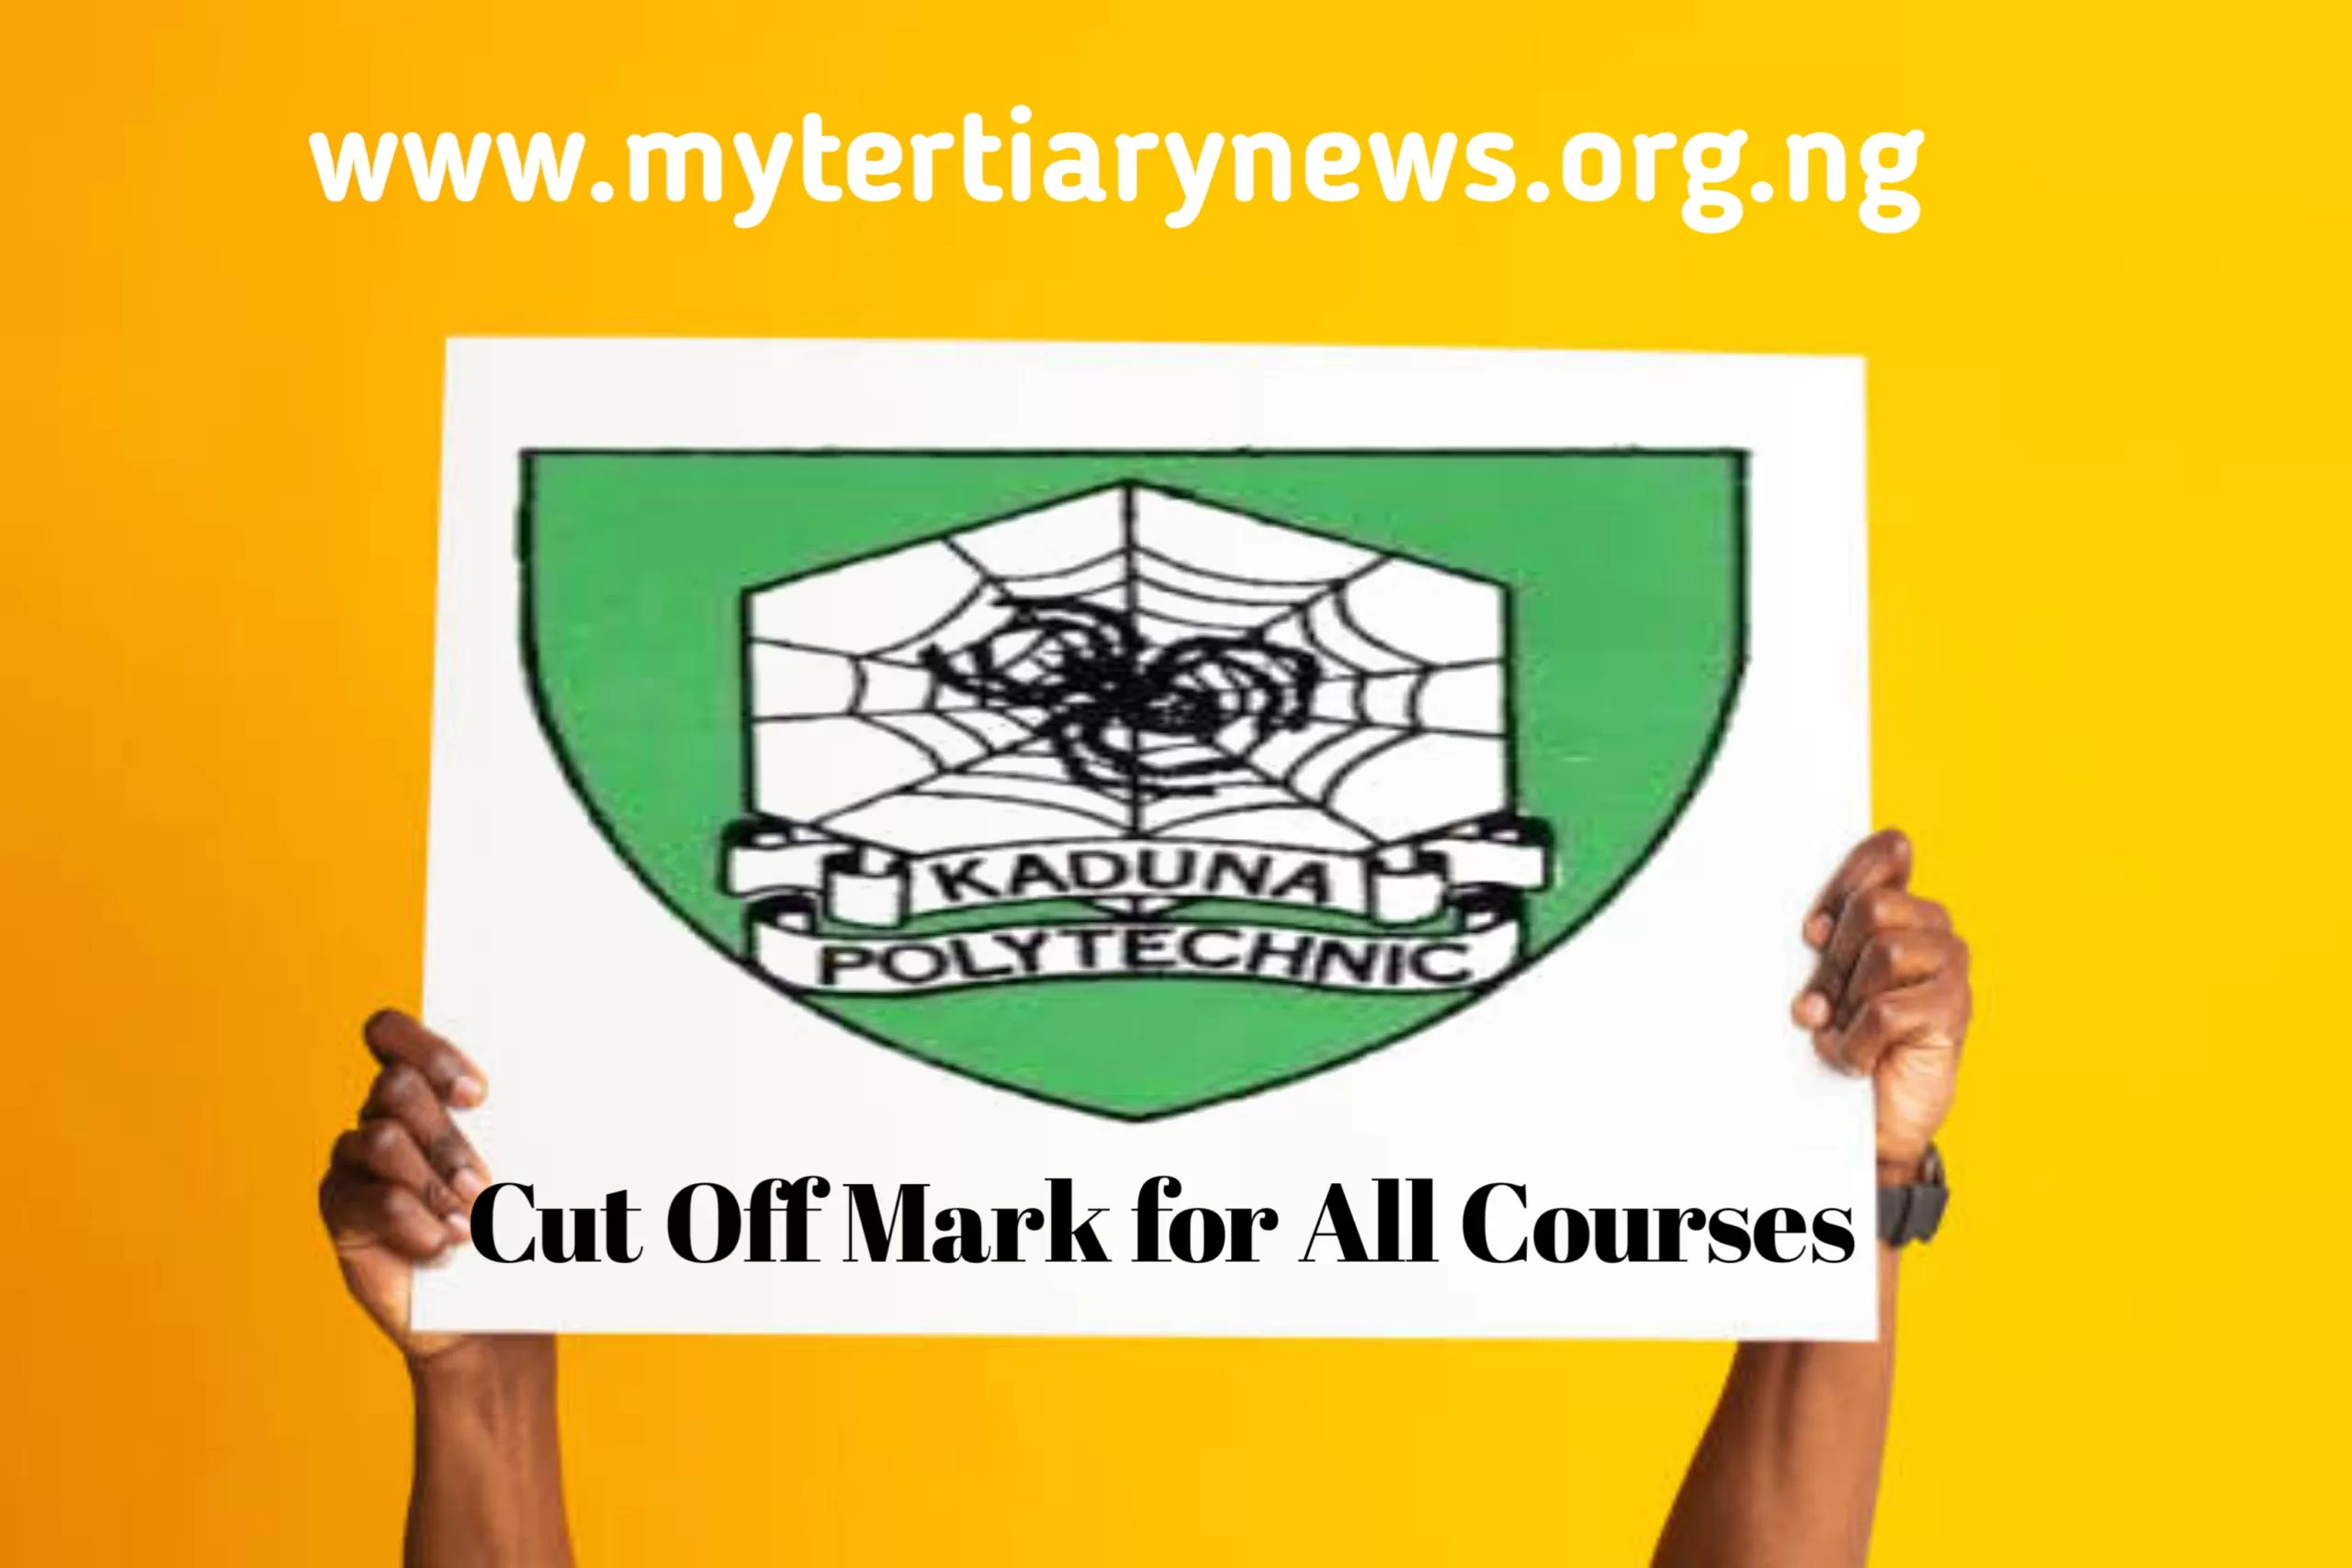 Kaduna Polytechnic Image || What is Kaduna Polytechnic Cut Off Mark for All Courses